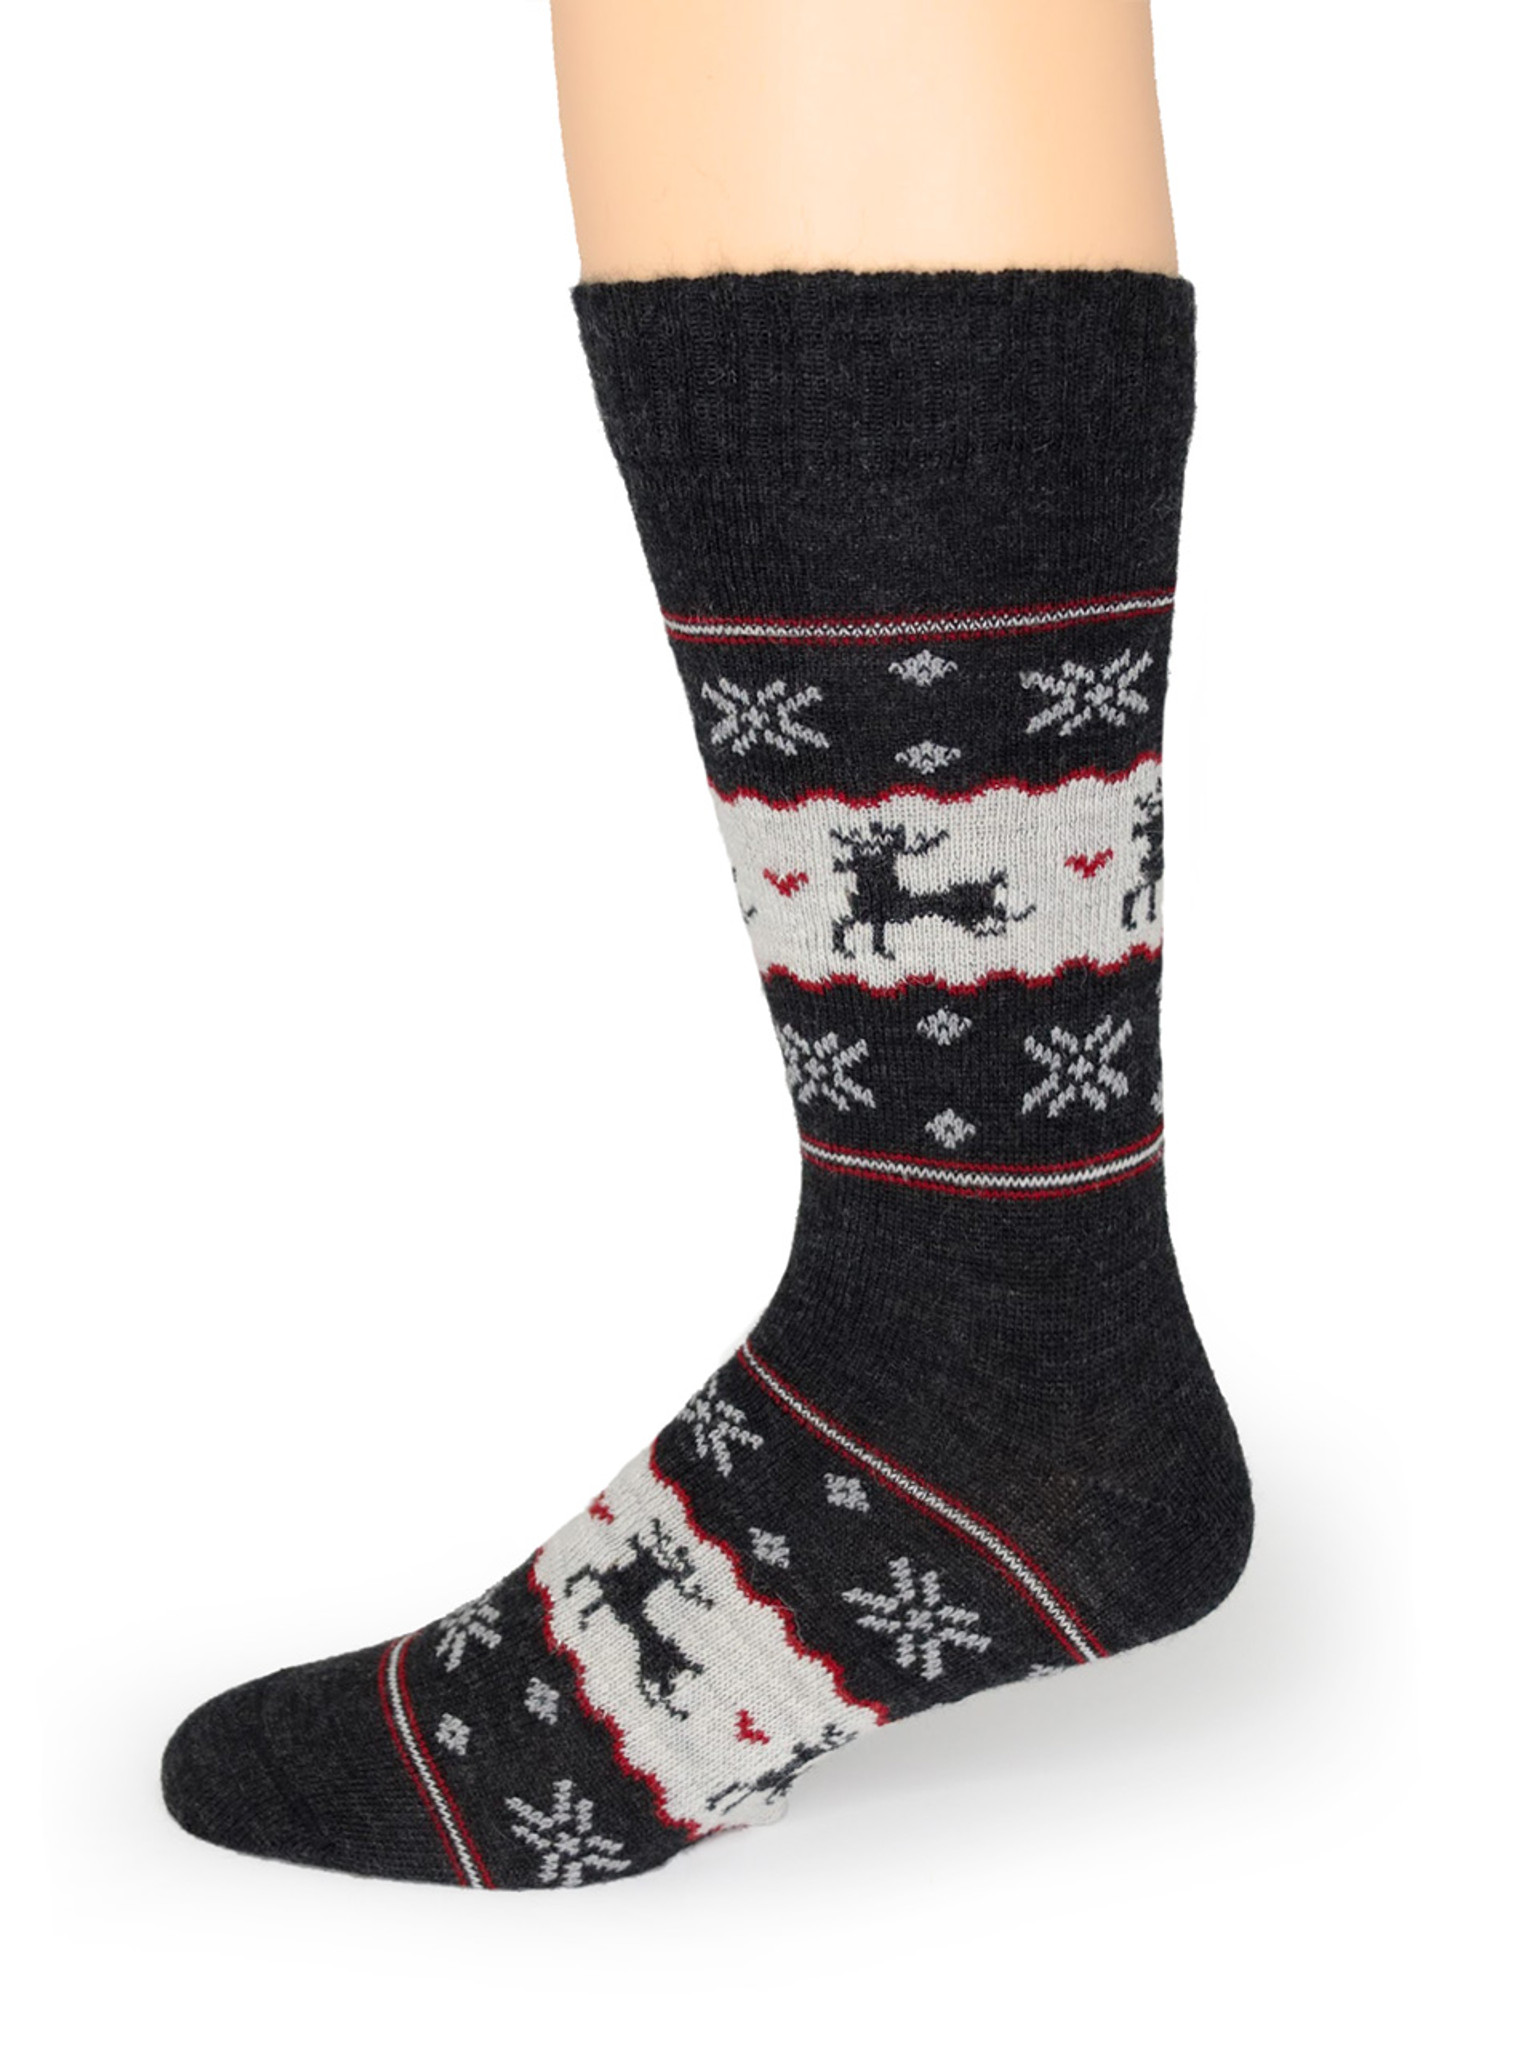 Reindeer Fair Isle Holiday Novelty Alpaca Socks for Men & Women ...